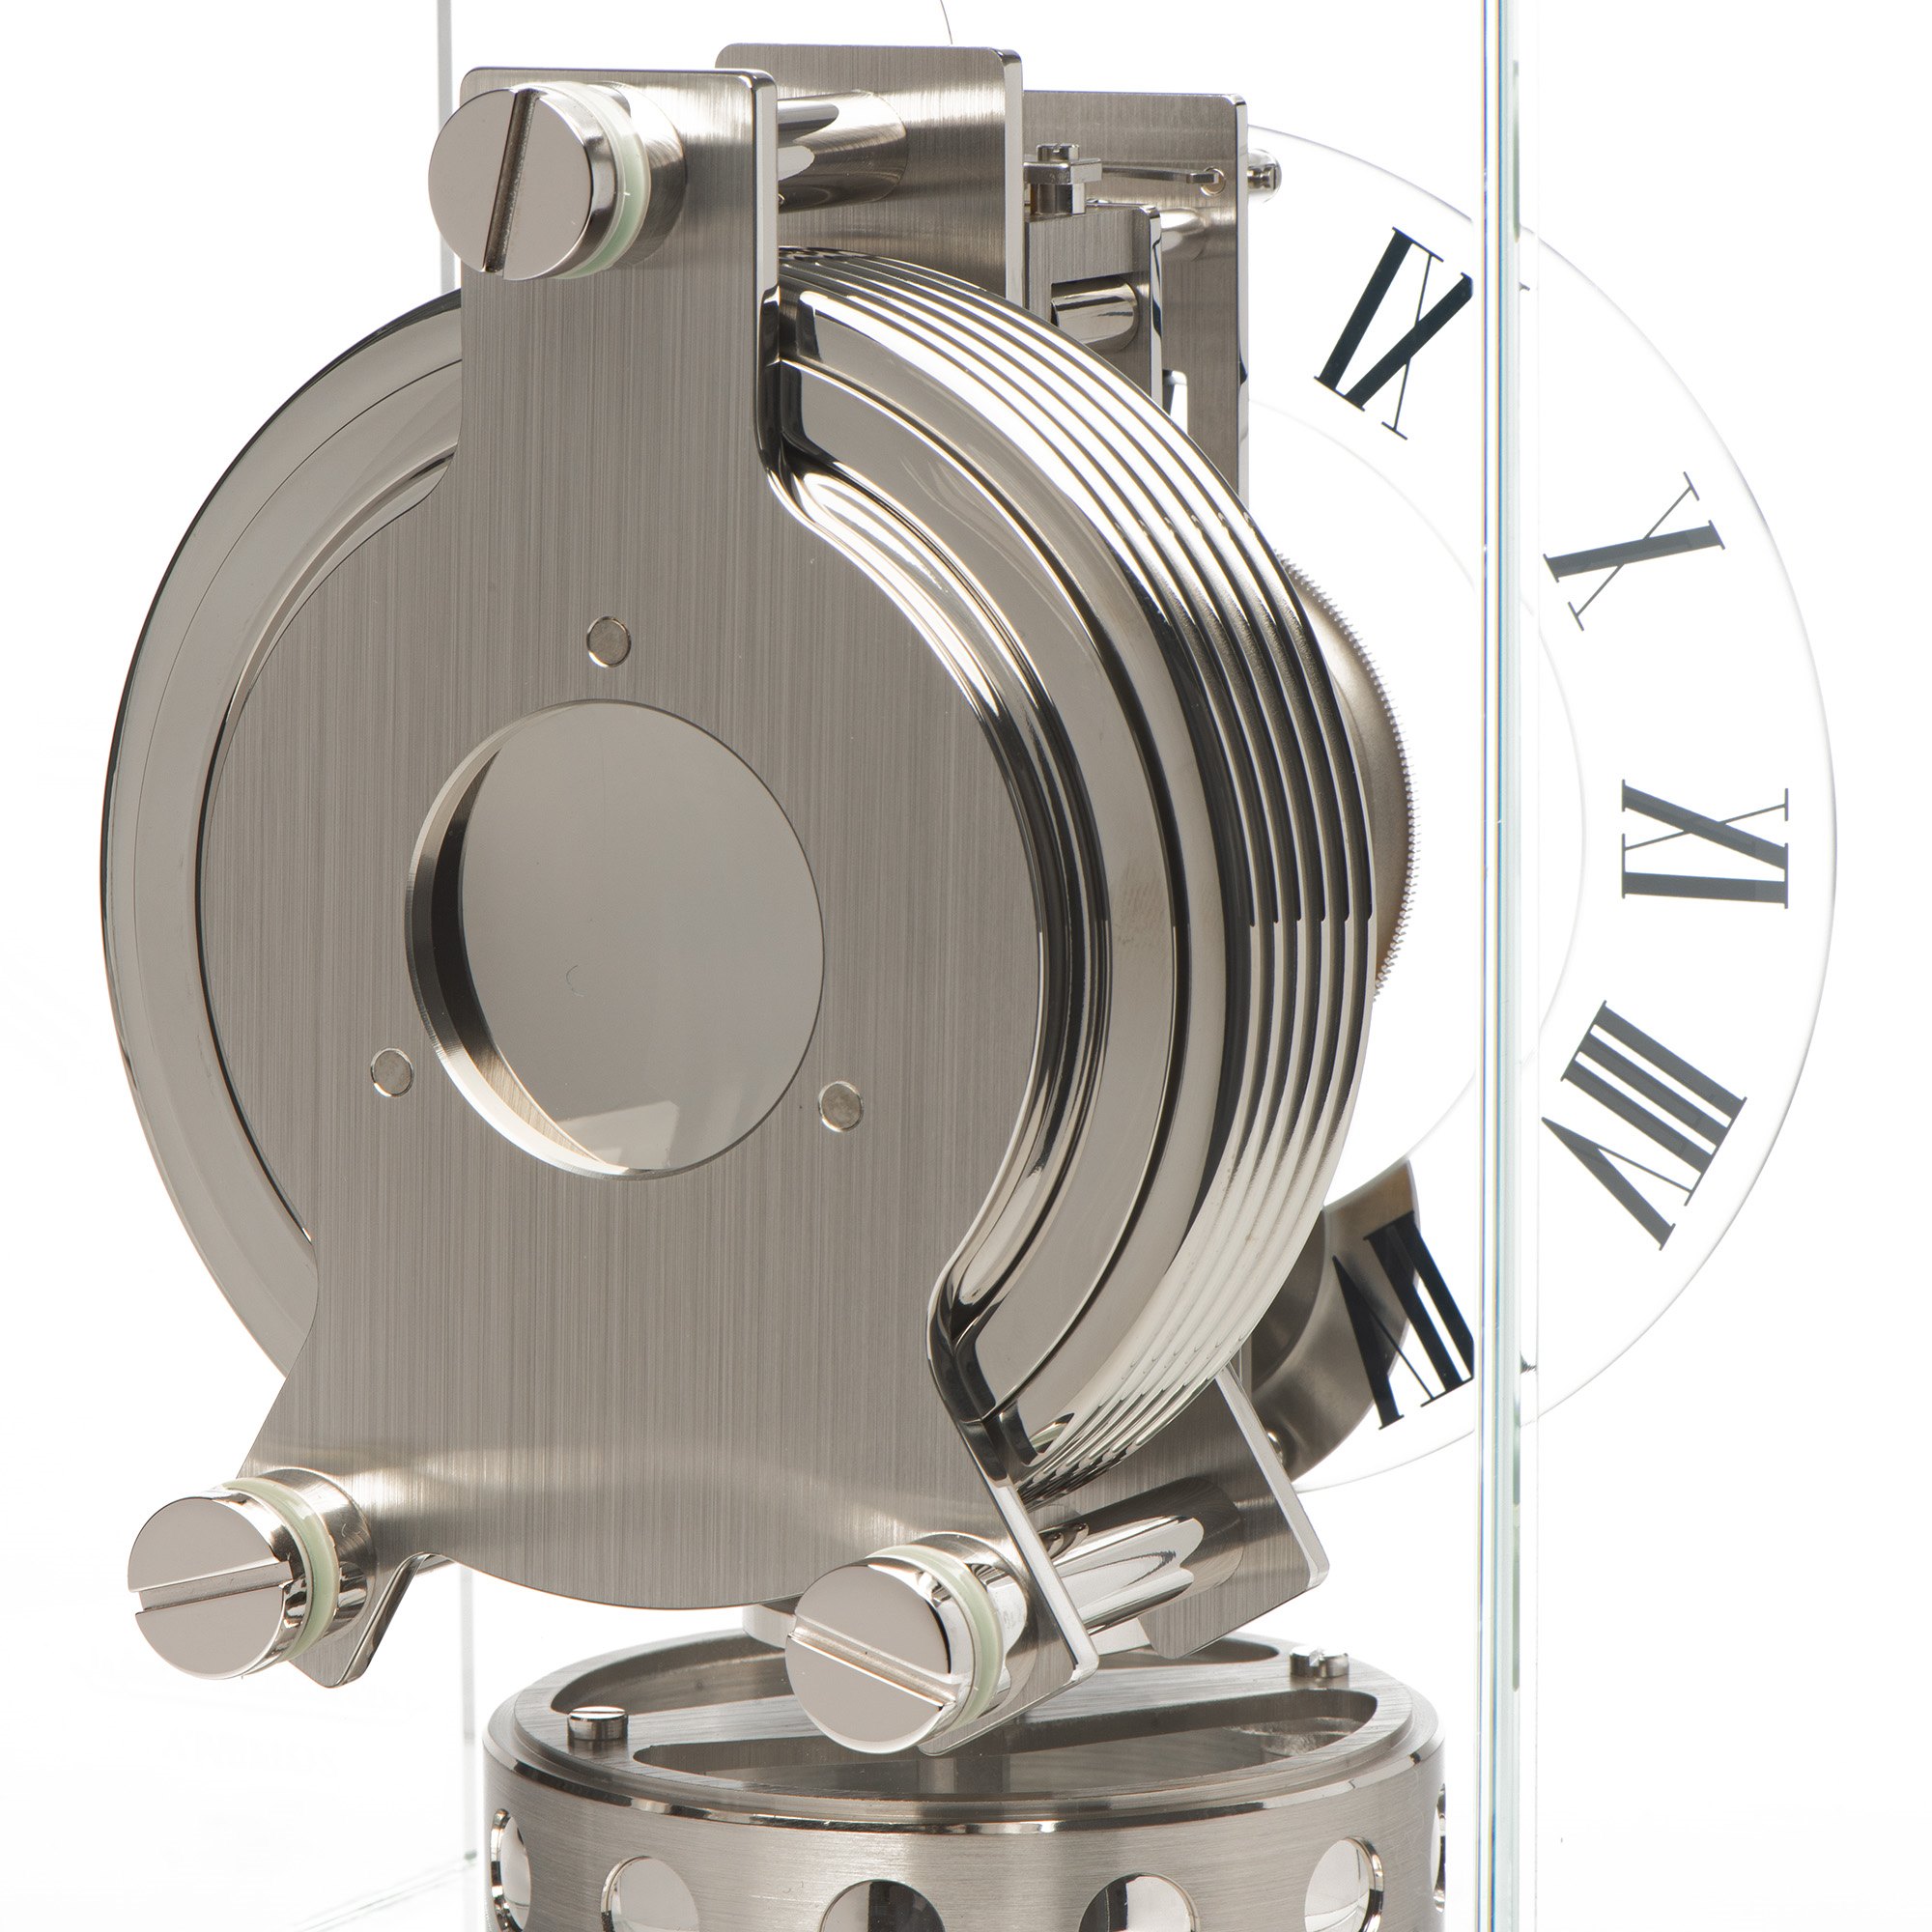 Jaeger-LeCoultre Atmos Clock 'Classique Phases de Lune Stainless Steel 3000